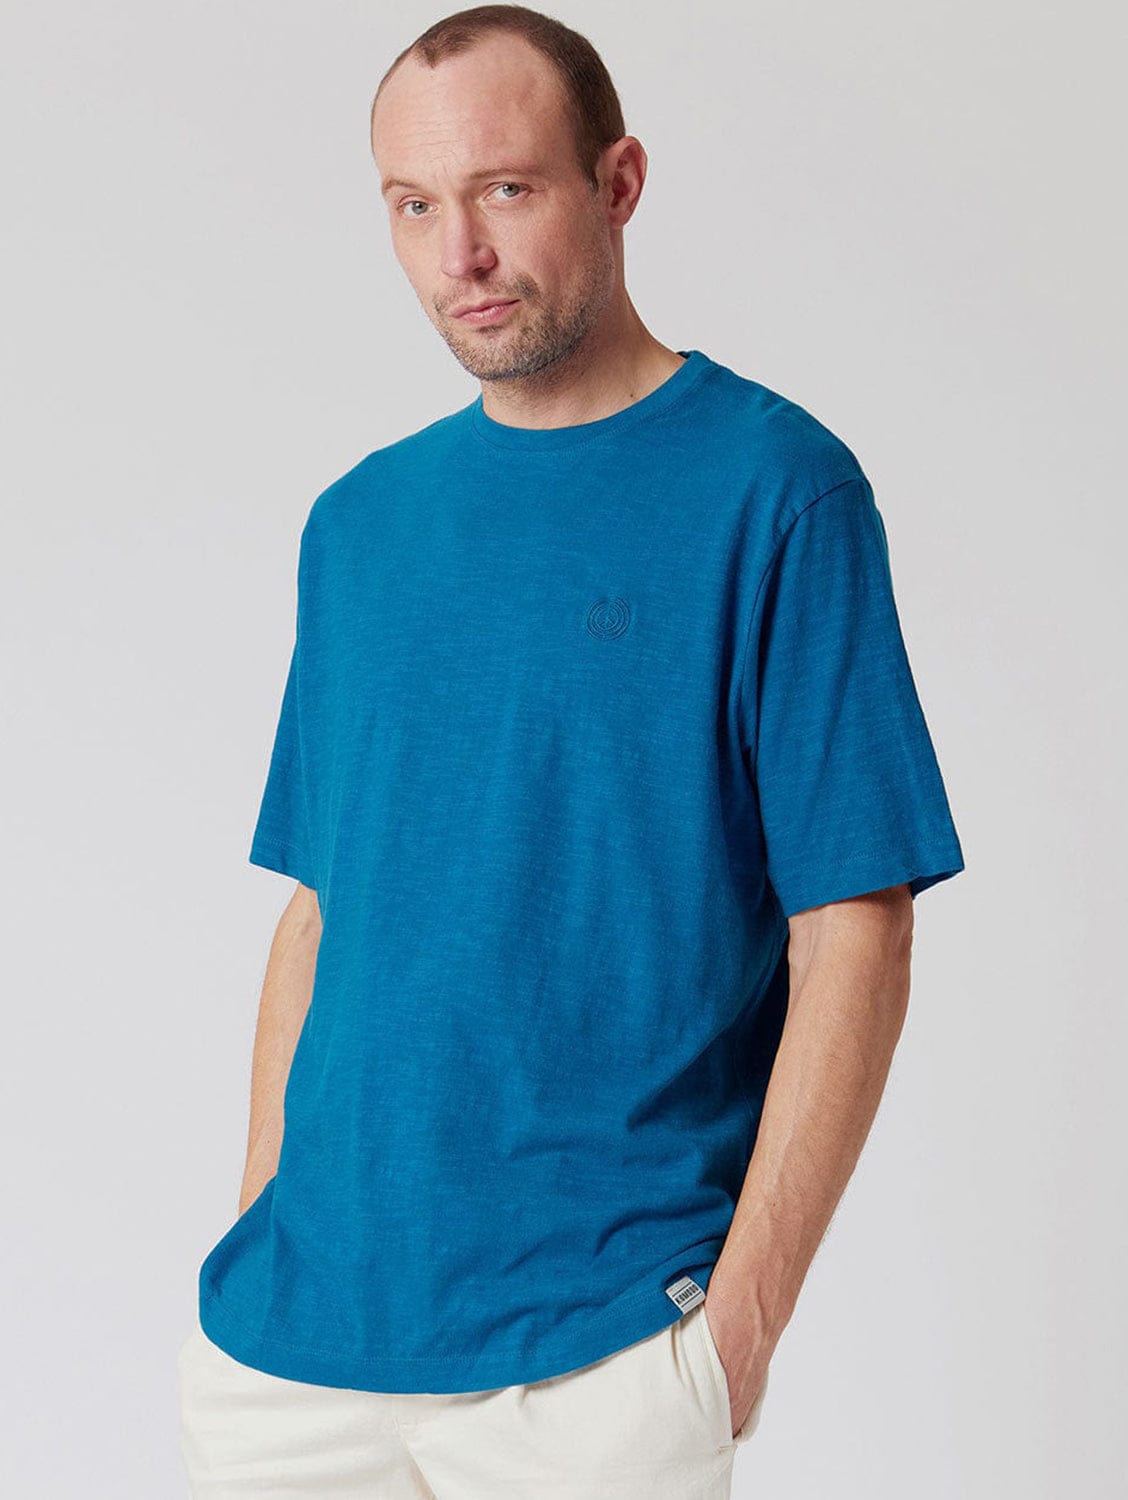 KOMODO Kin Organic Cotton T-shirt | Teal Blue